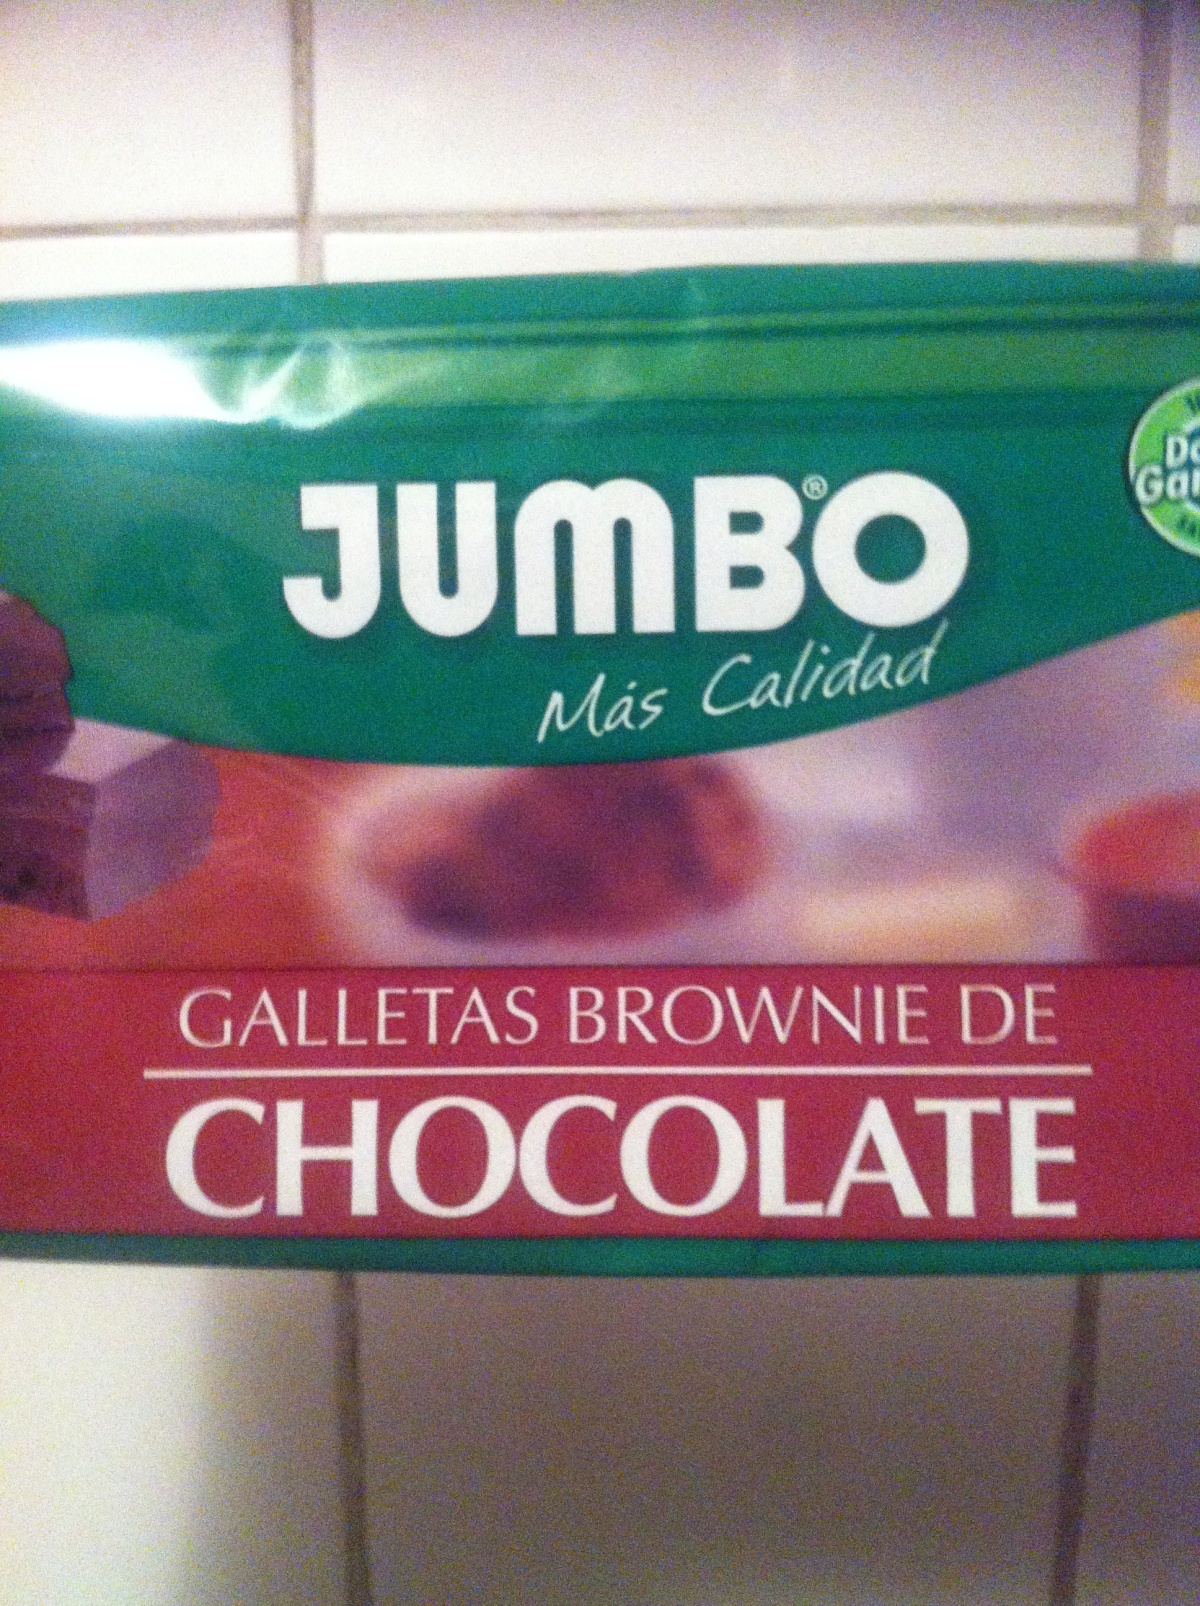 Galletas brownie de chocolate Jumbo